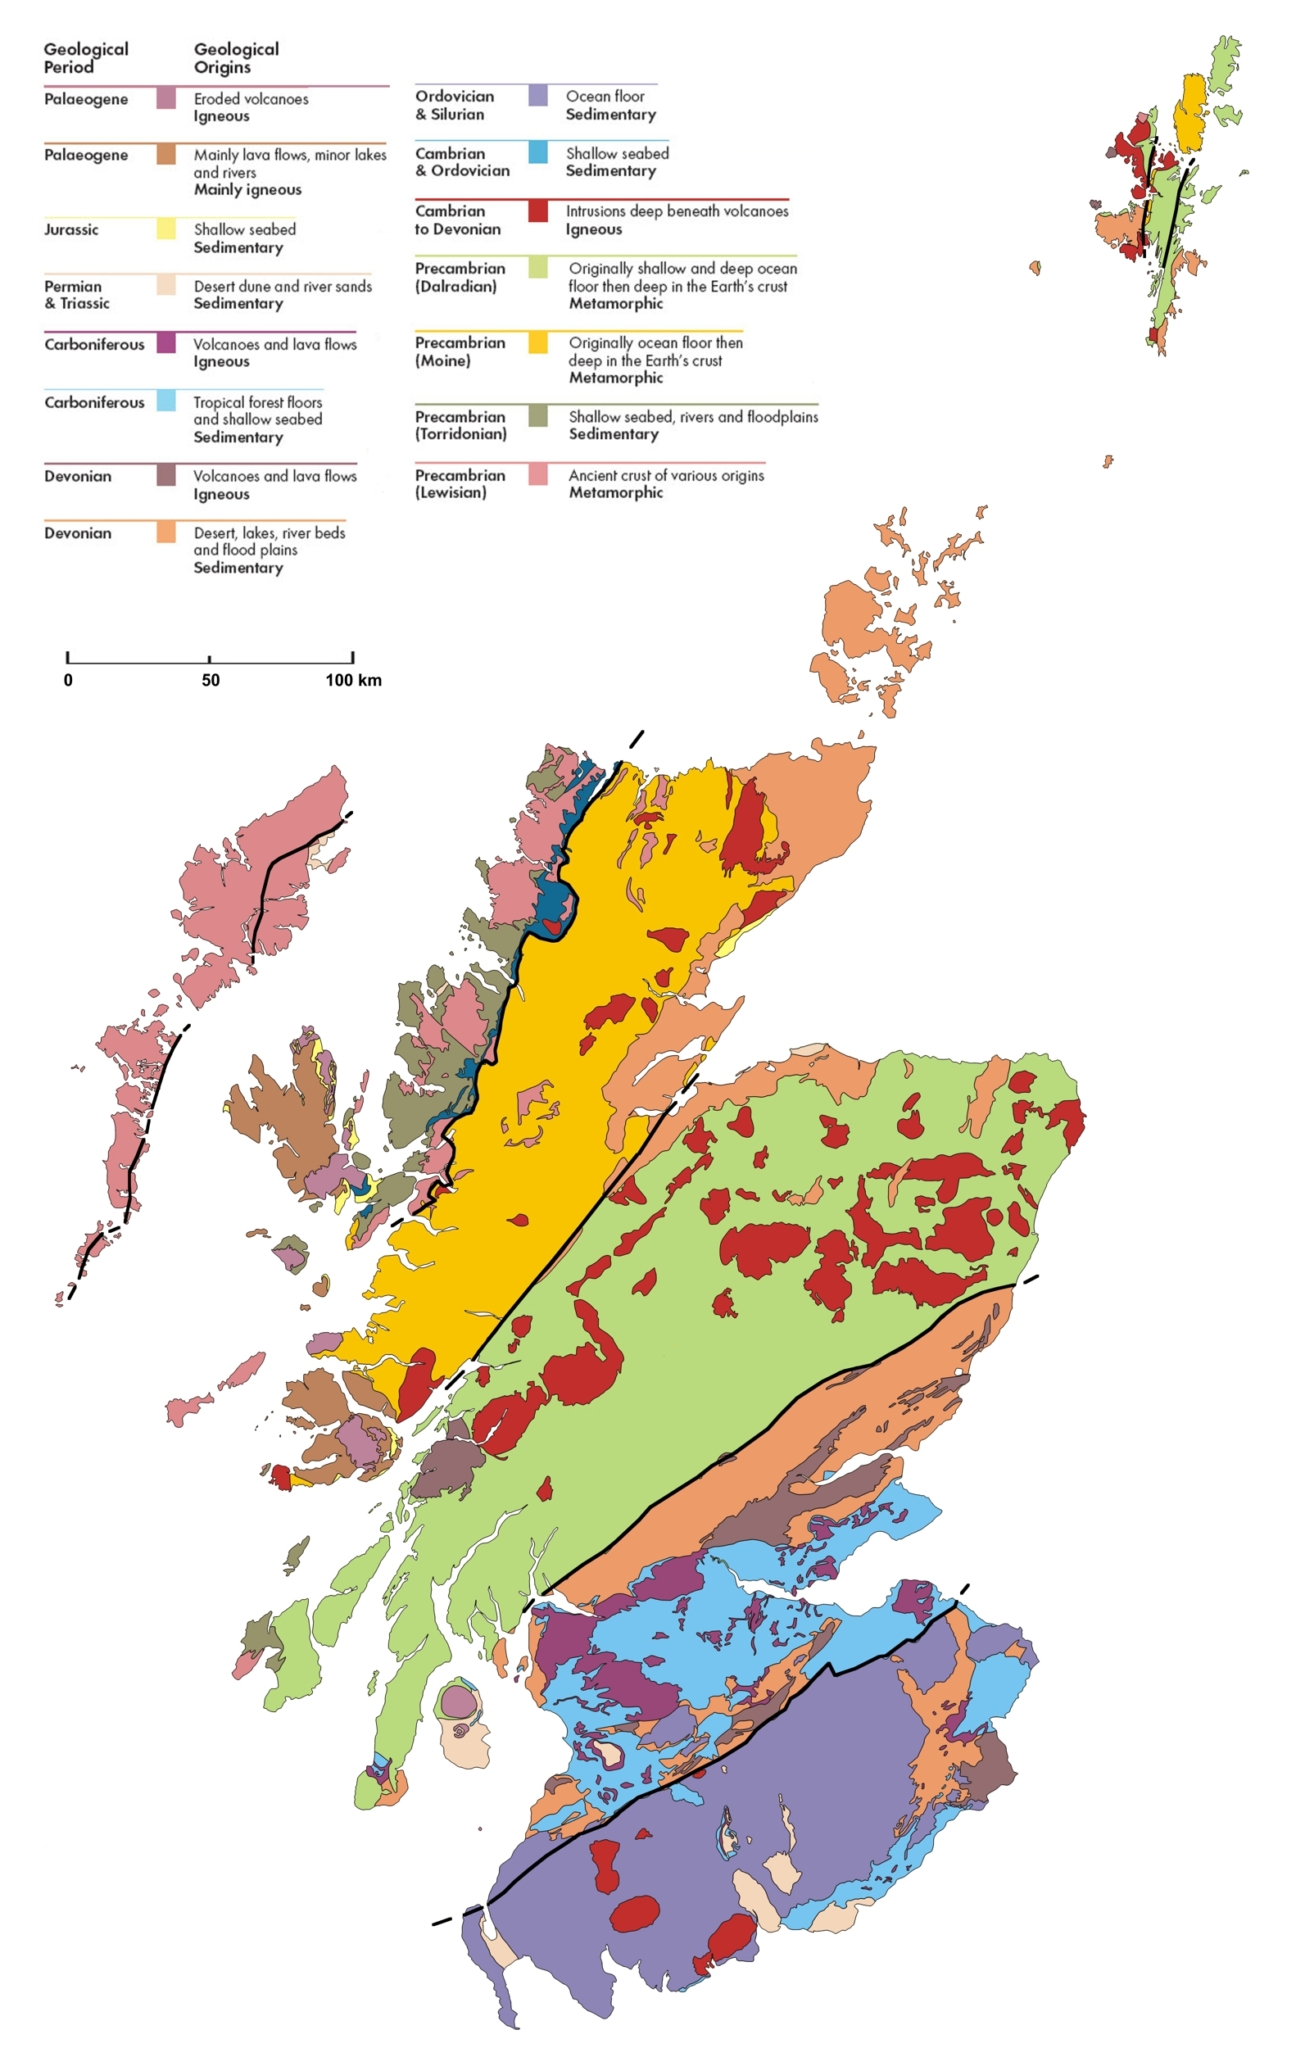 scotland-geology-map-with-key-1296x2048.jpg